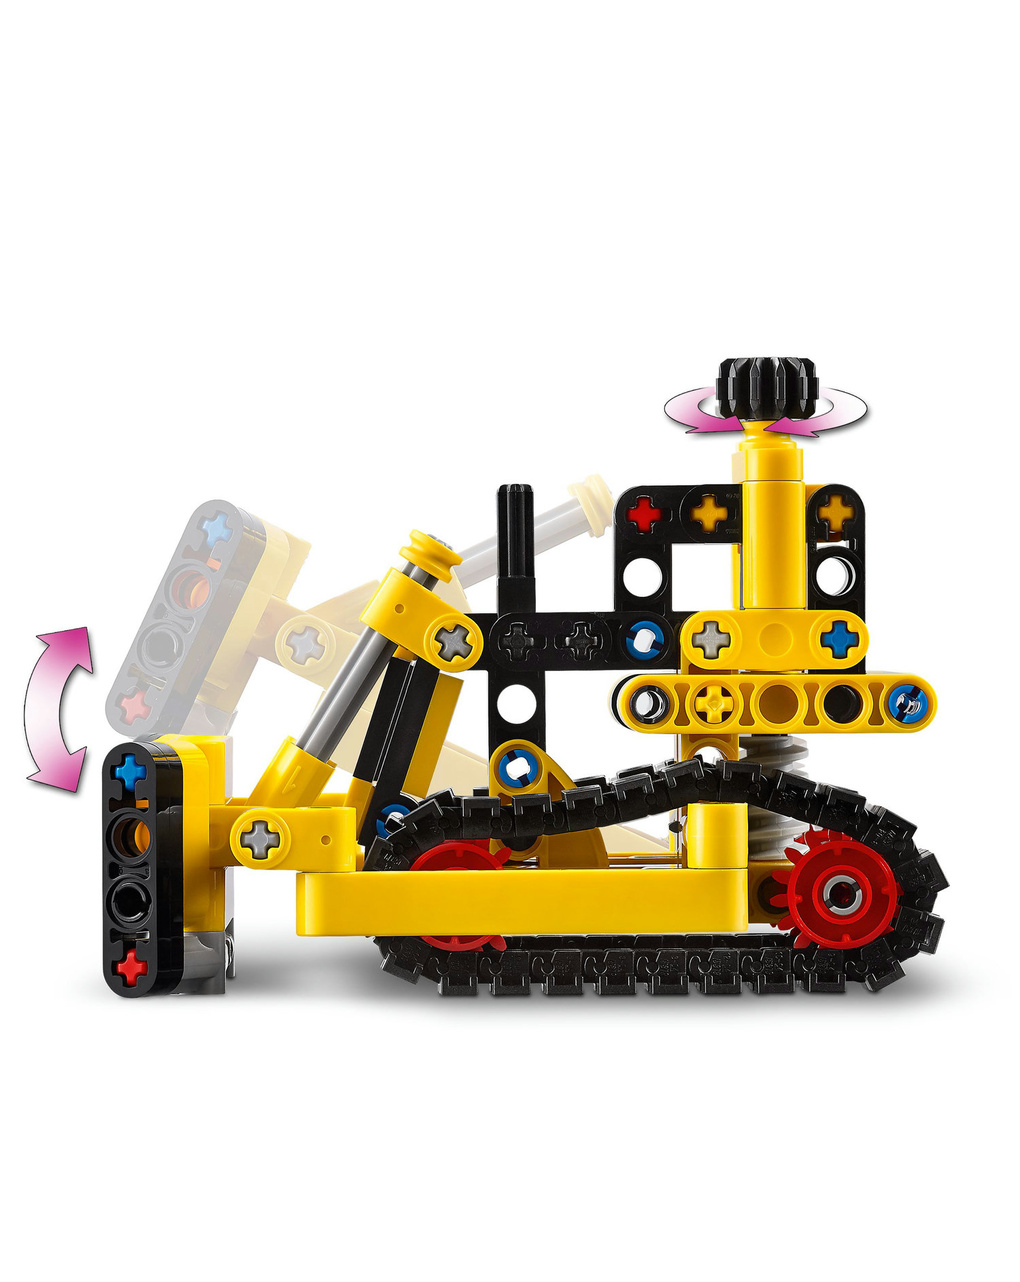 Bulldozer de obra - 42163 - lego technic - LEGO